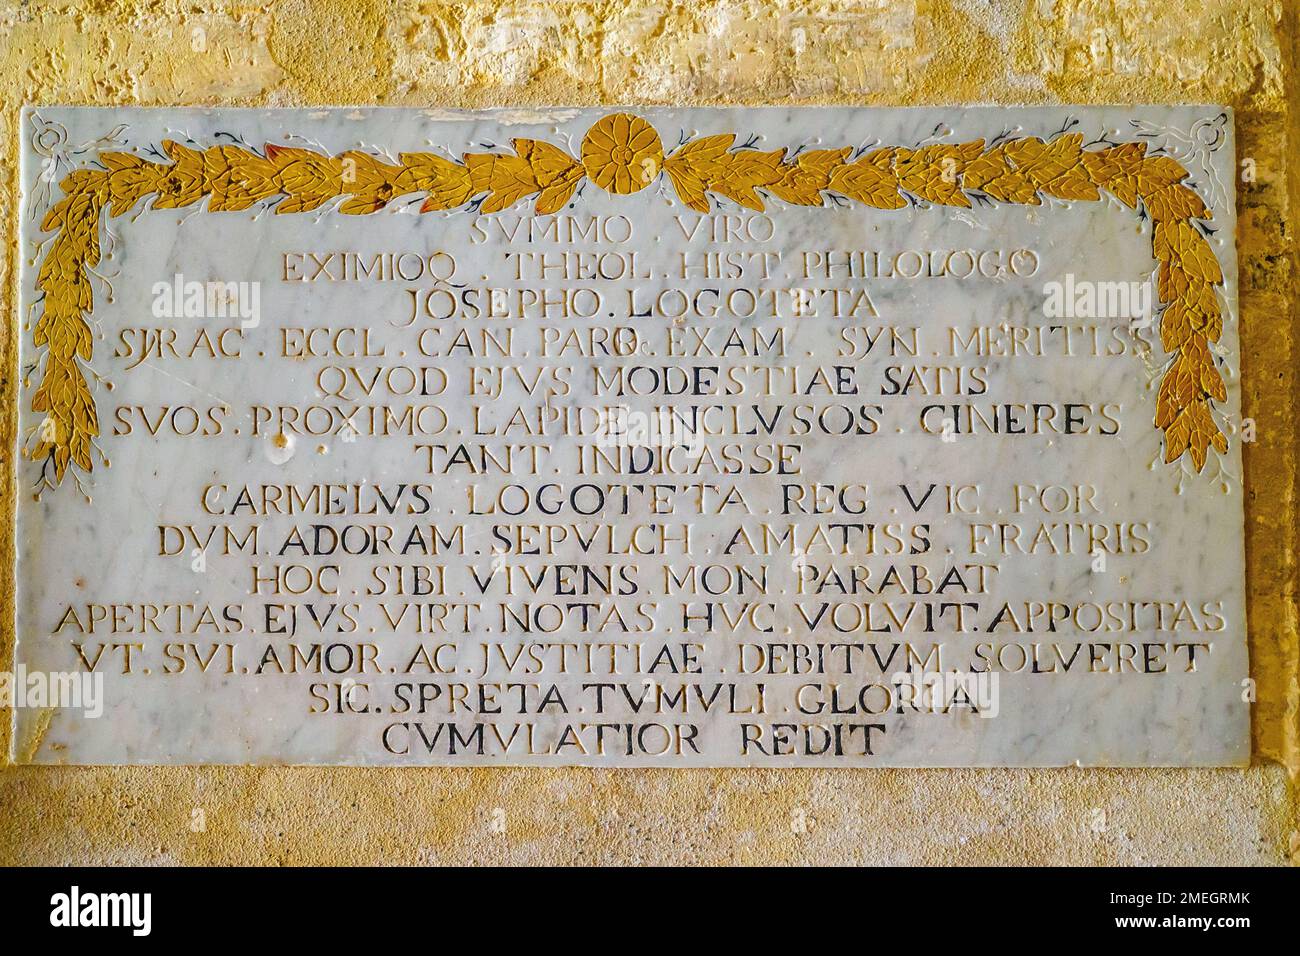 Commemorative plaque to Giuseppe Logoteta 1808 in the church of San Pietro Apostolo  (IV century AD) - Syracuse, Sicily, Italy Stock Photo